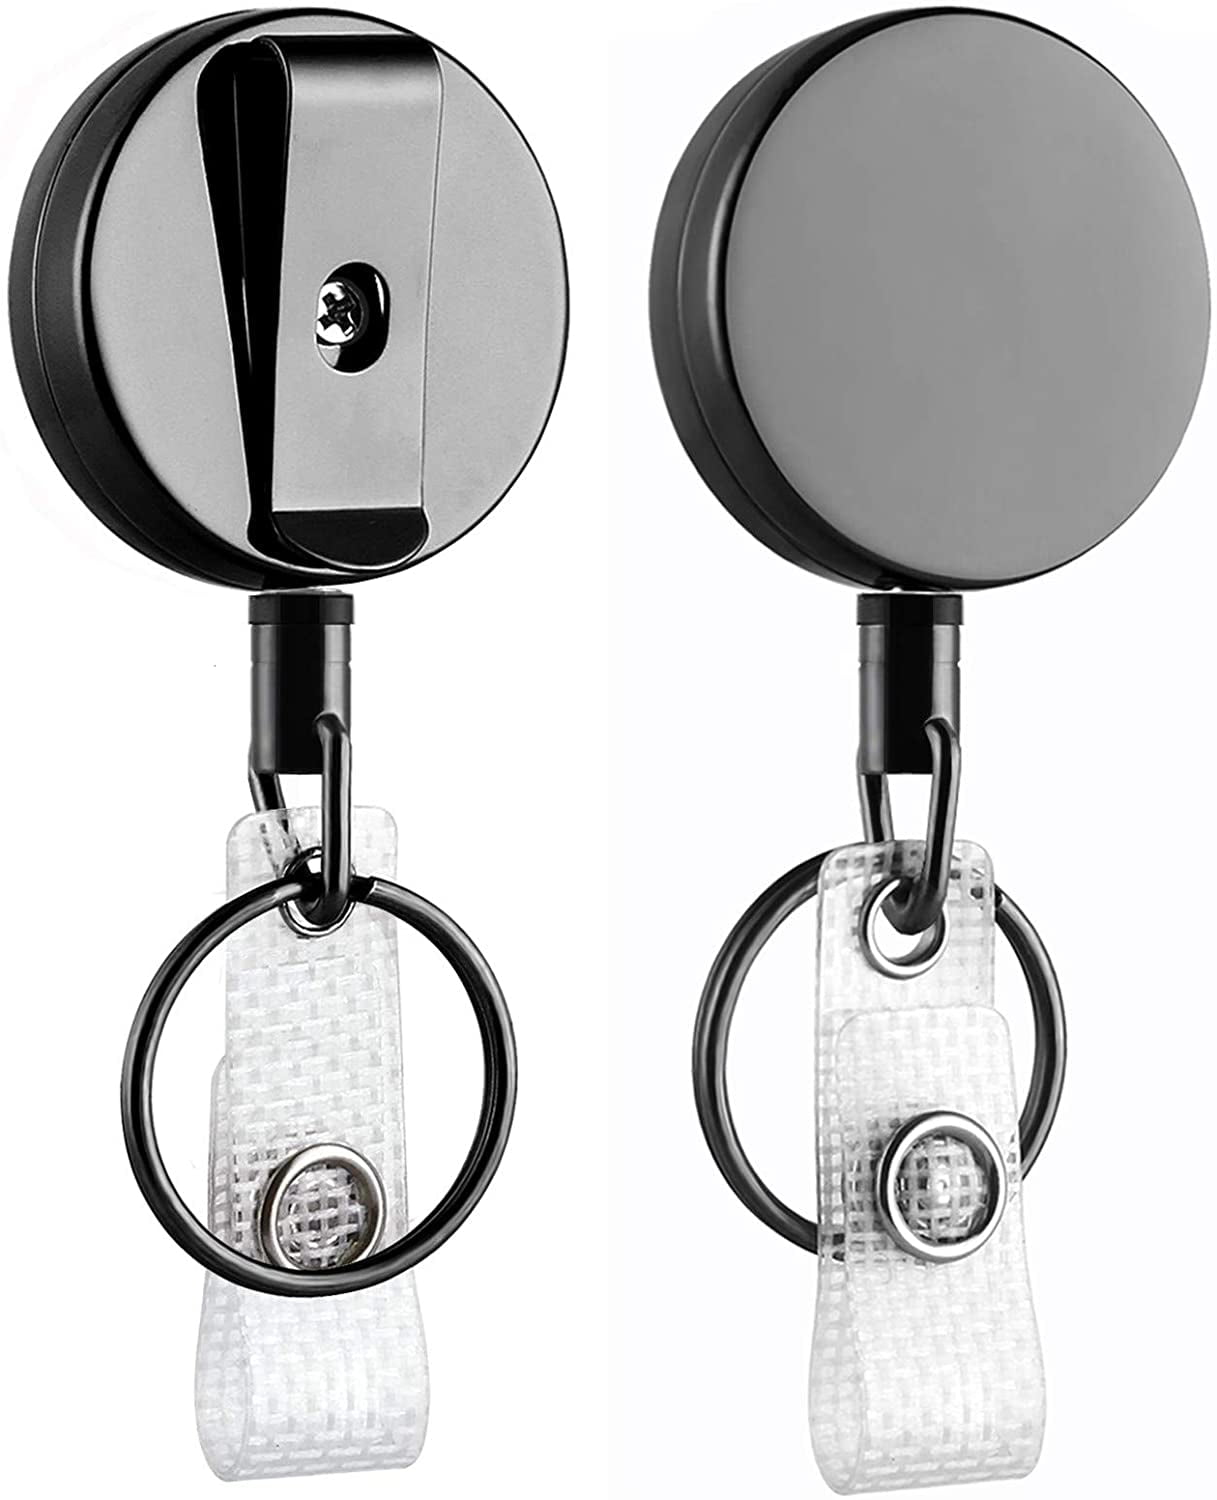 NEW UK Badge Reel Pull Ring Retractable Key Chain Keyring Heavy Duty Nylon Cord 